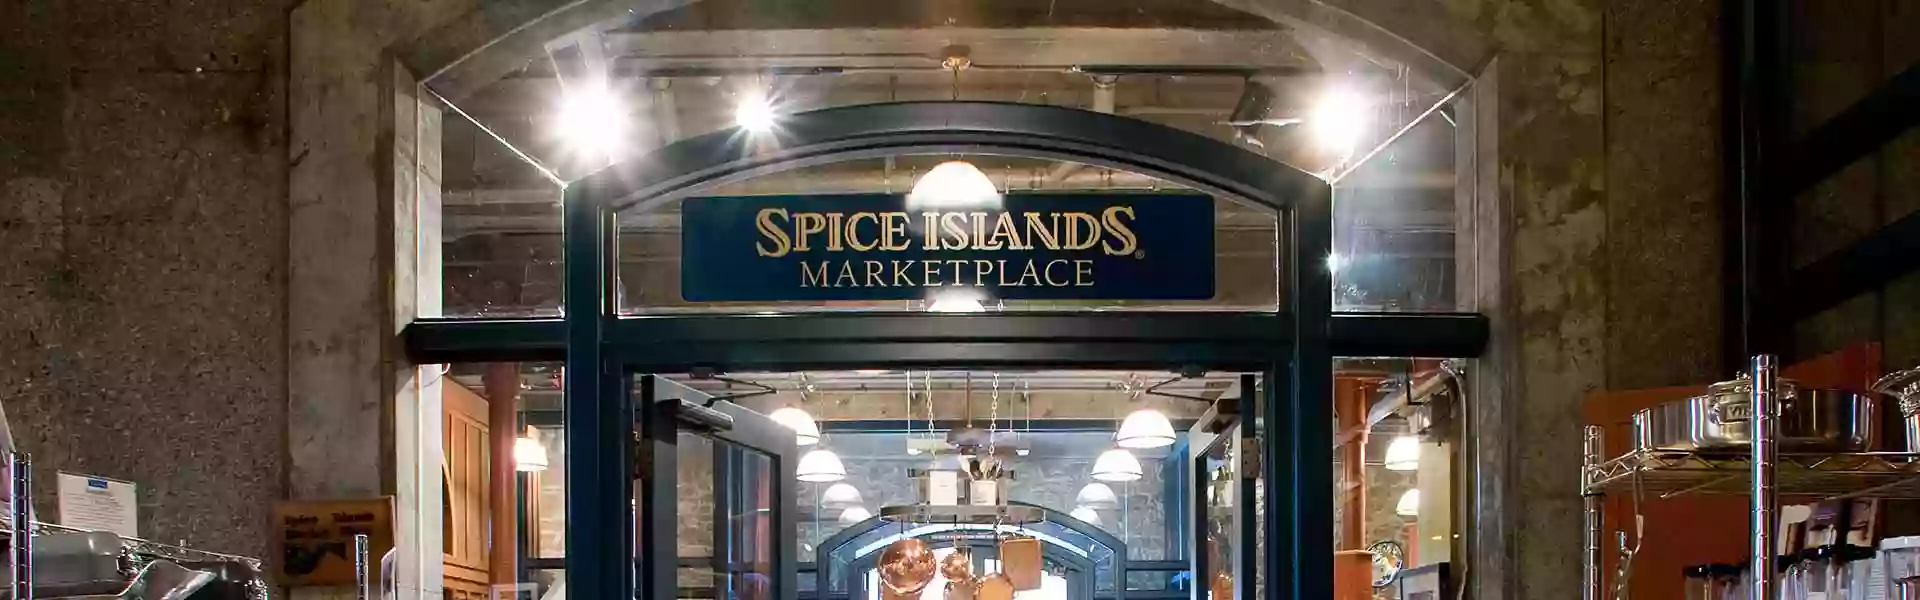 Spice Islands Marketplace